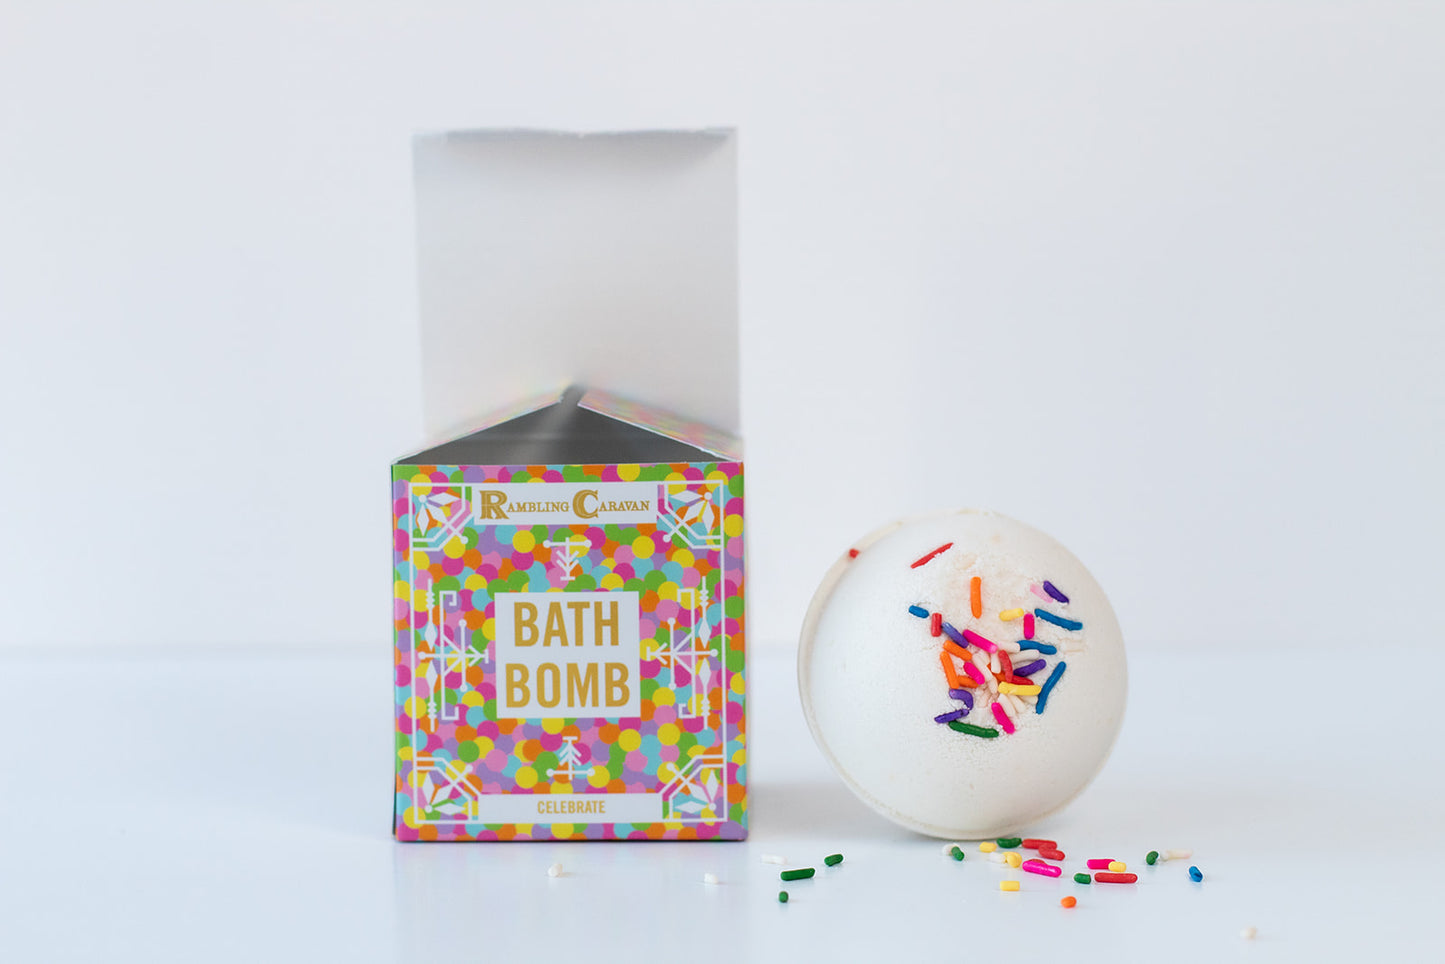 Bath Bomb - Celebrate